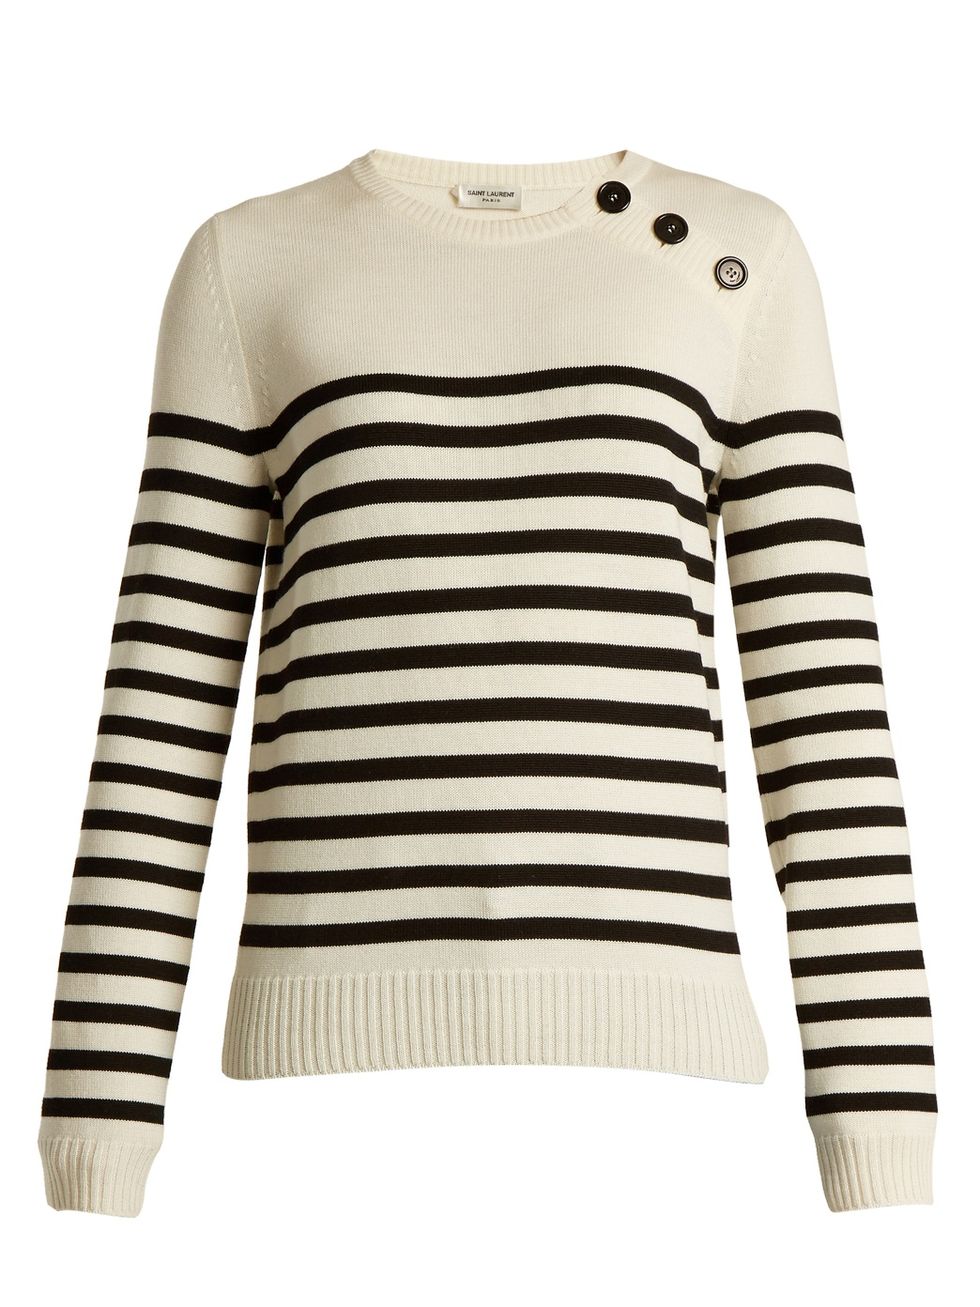 6 Best Striped Shirts - Breton Stripes